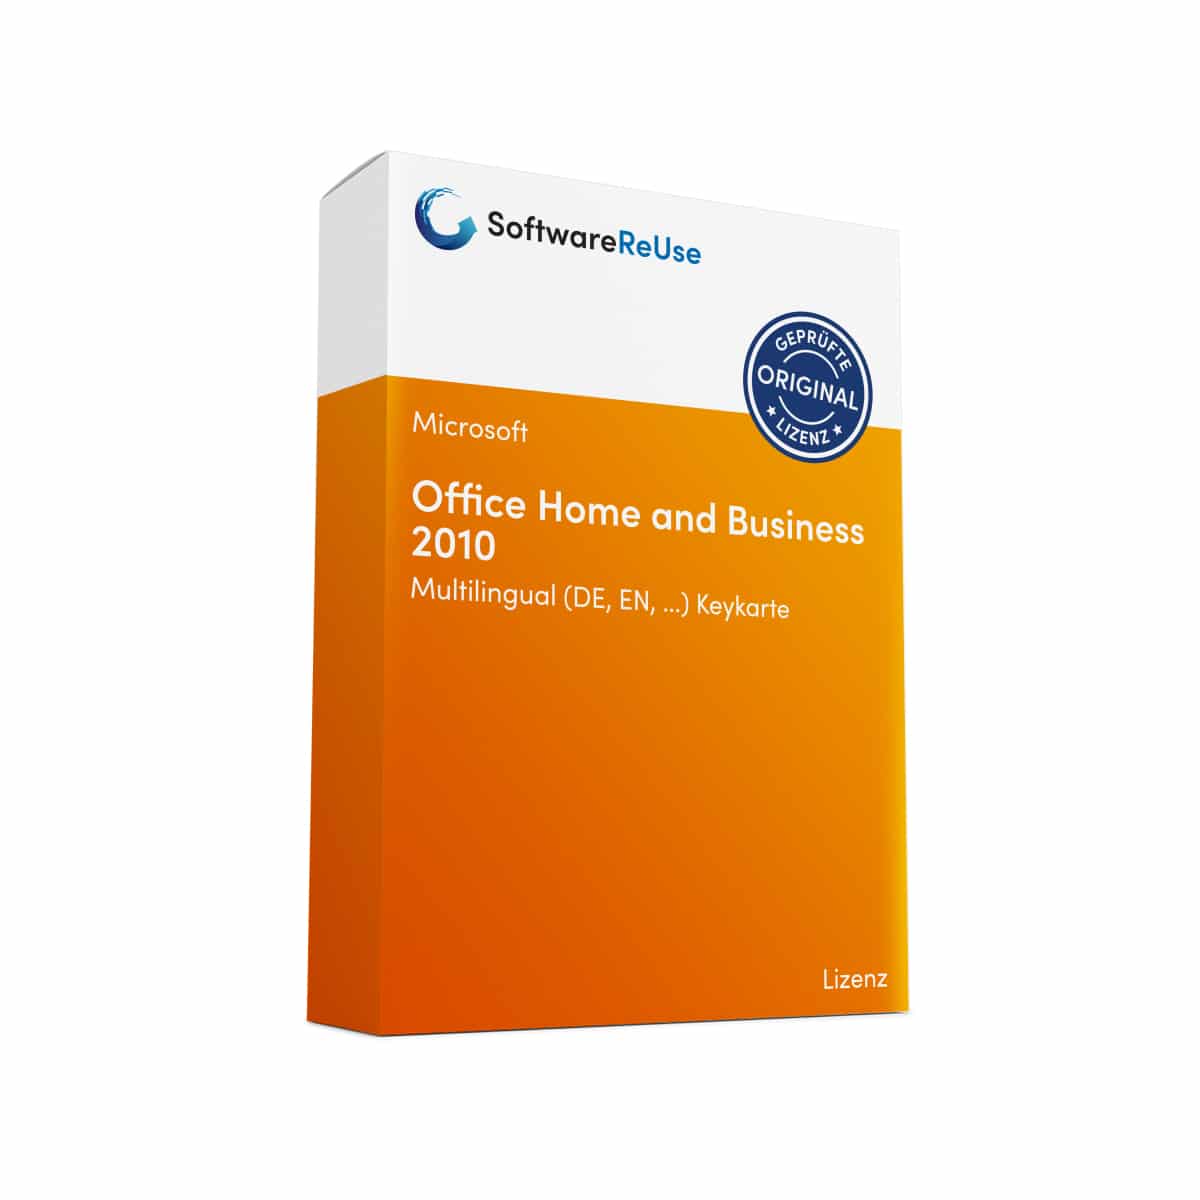 Office Home and Business 2010 multilingual Keykarte – DE